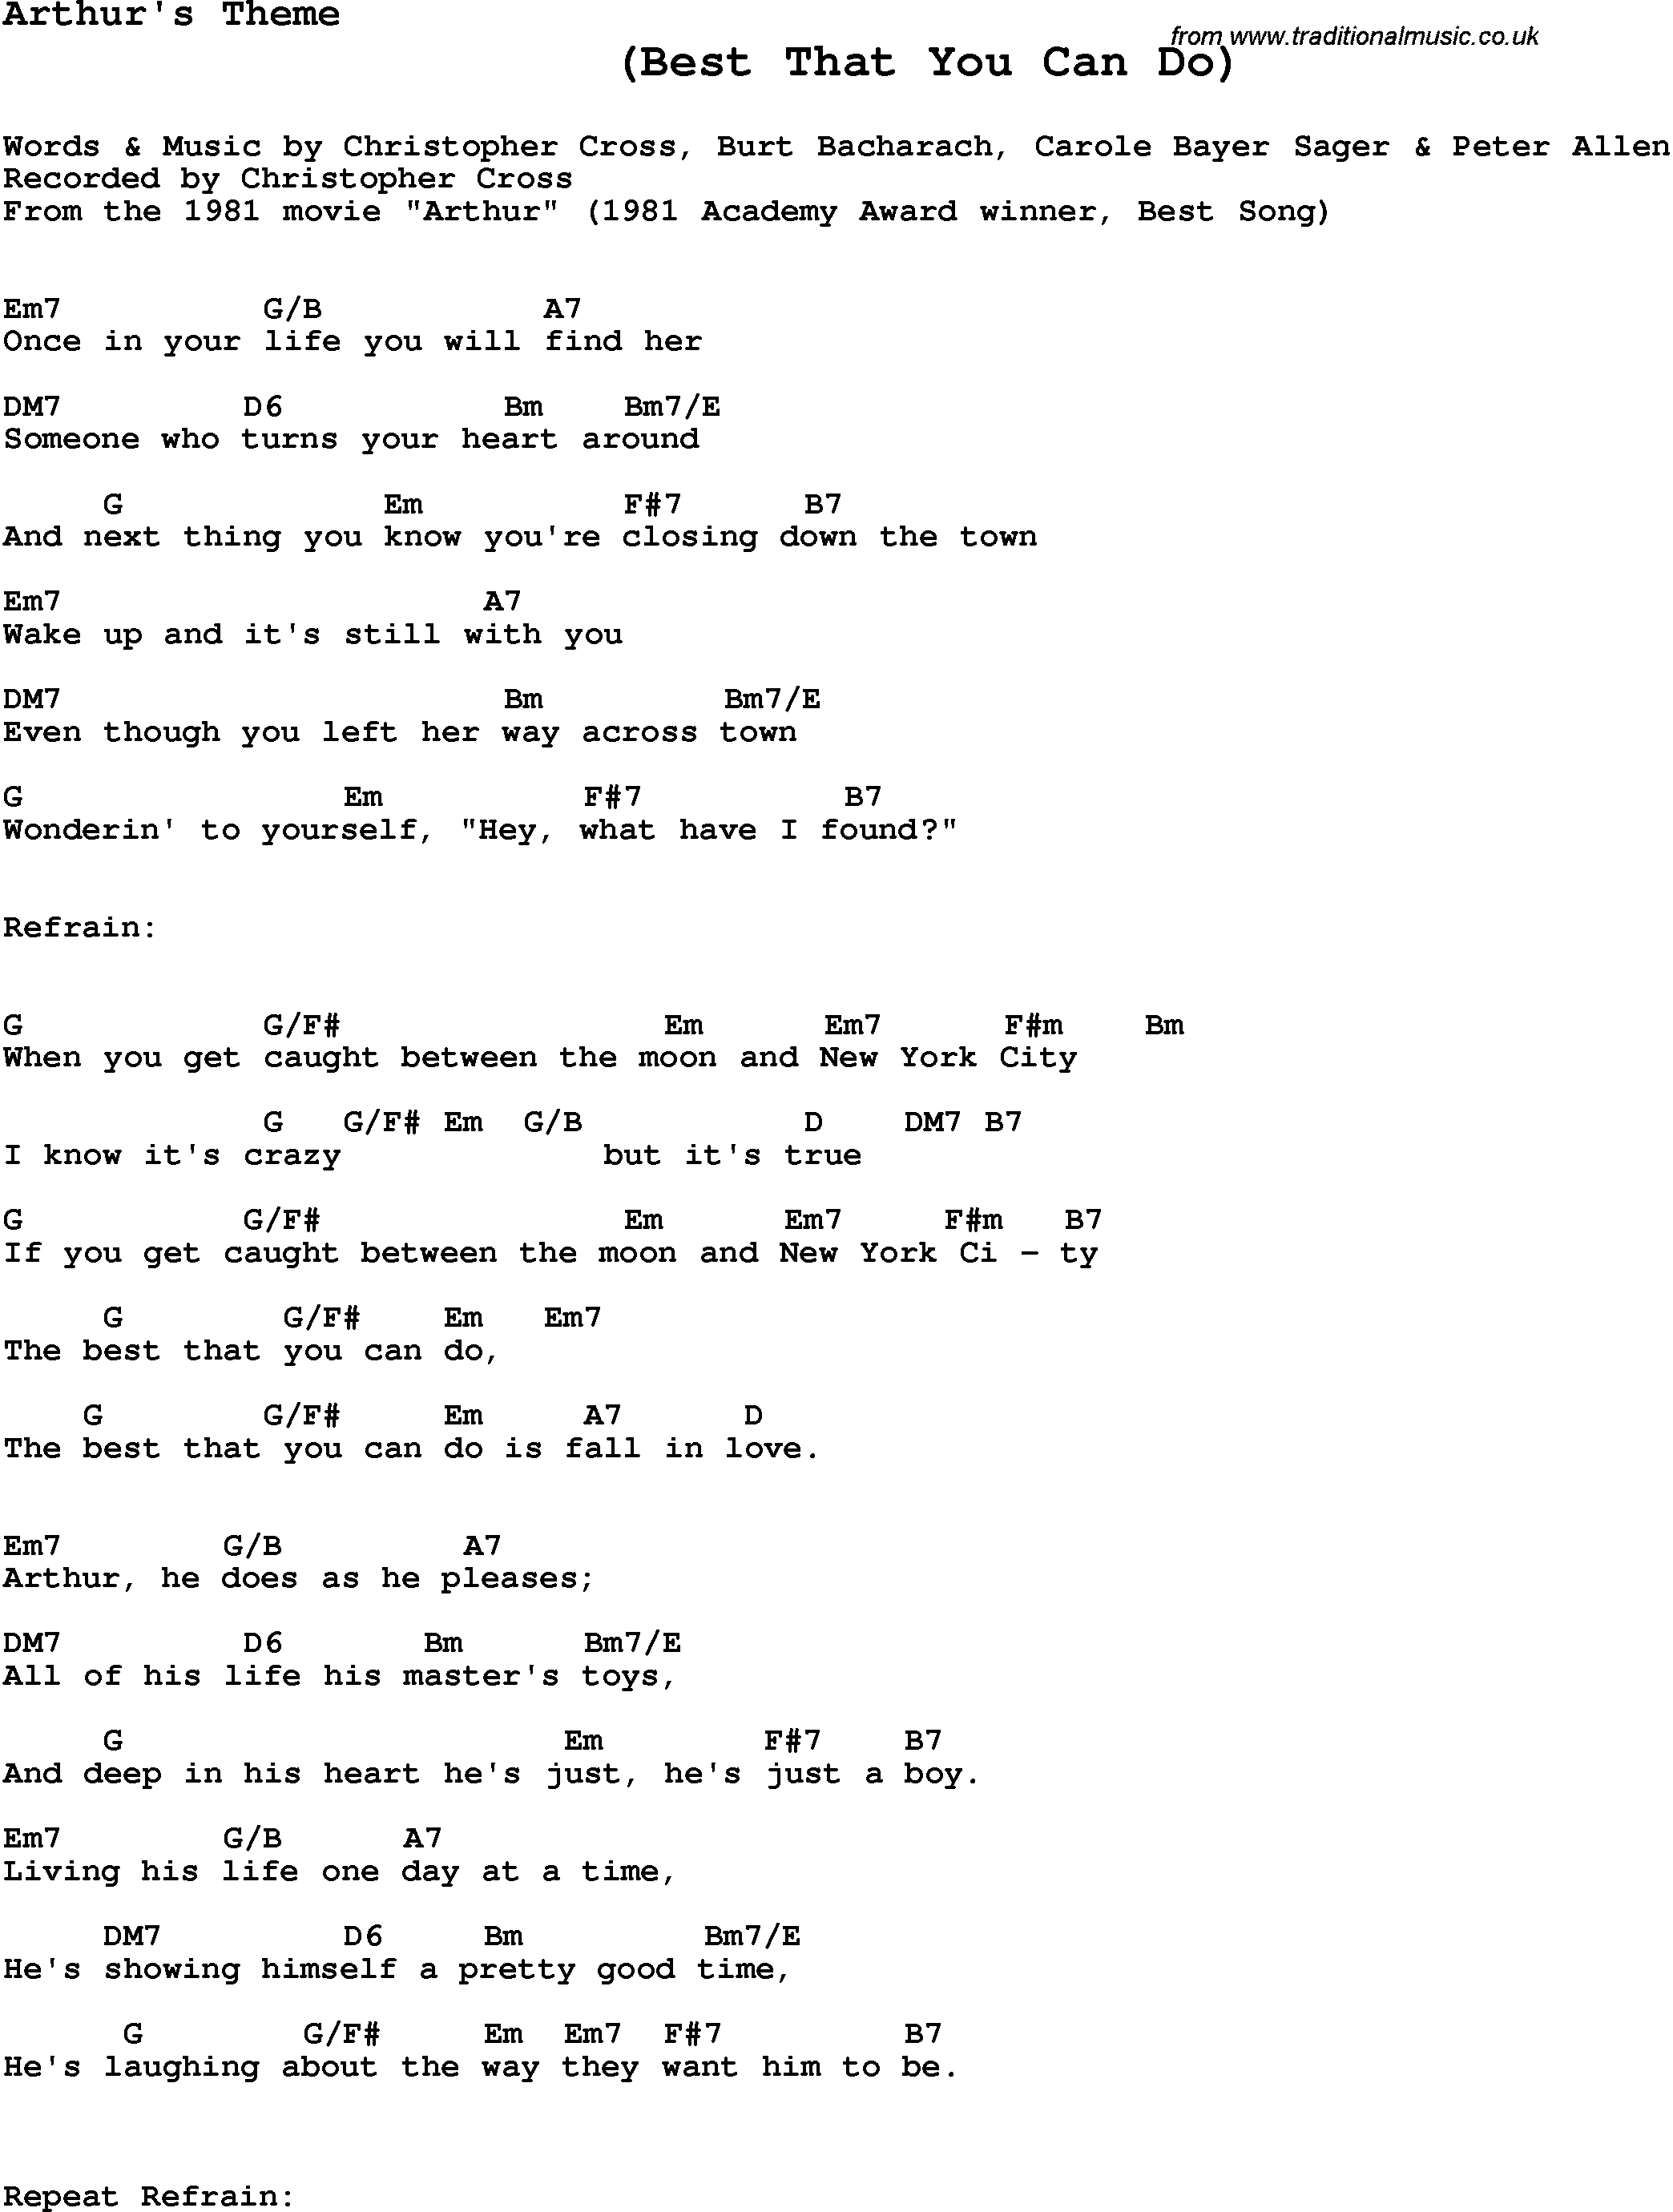 Song Lyrics with guitar chords for Arthur's Theme - Christopher Cross, 1981